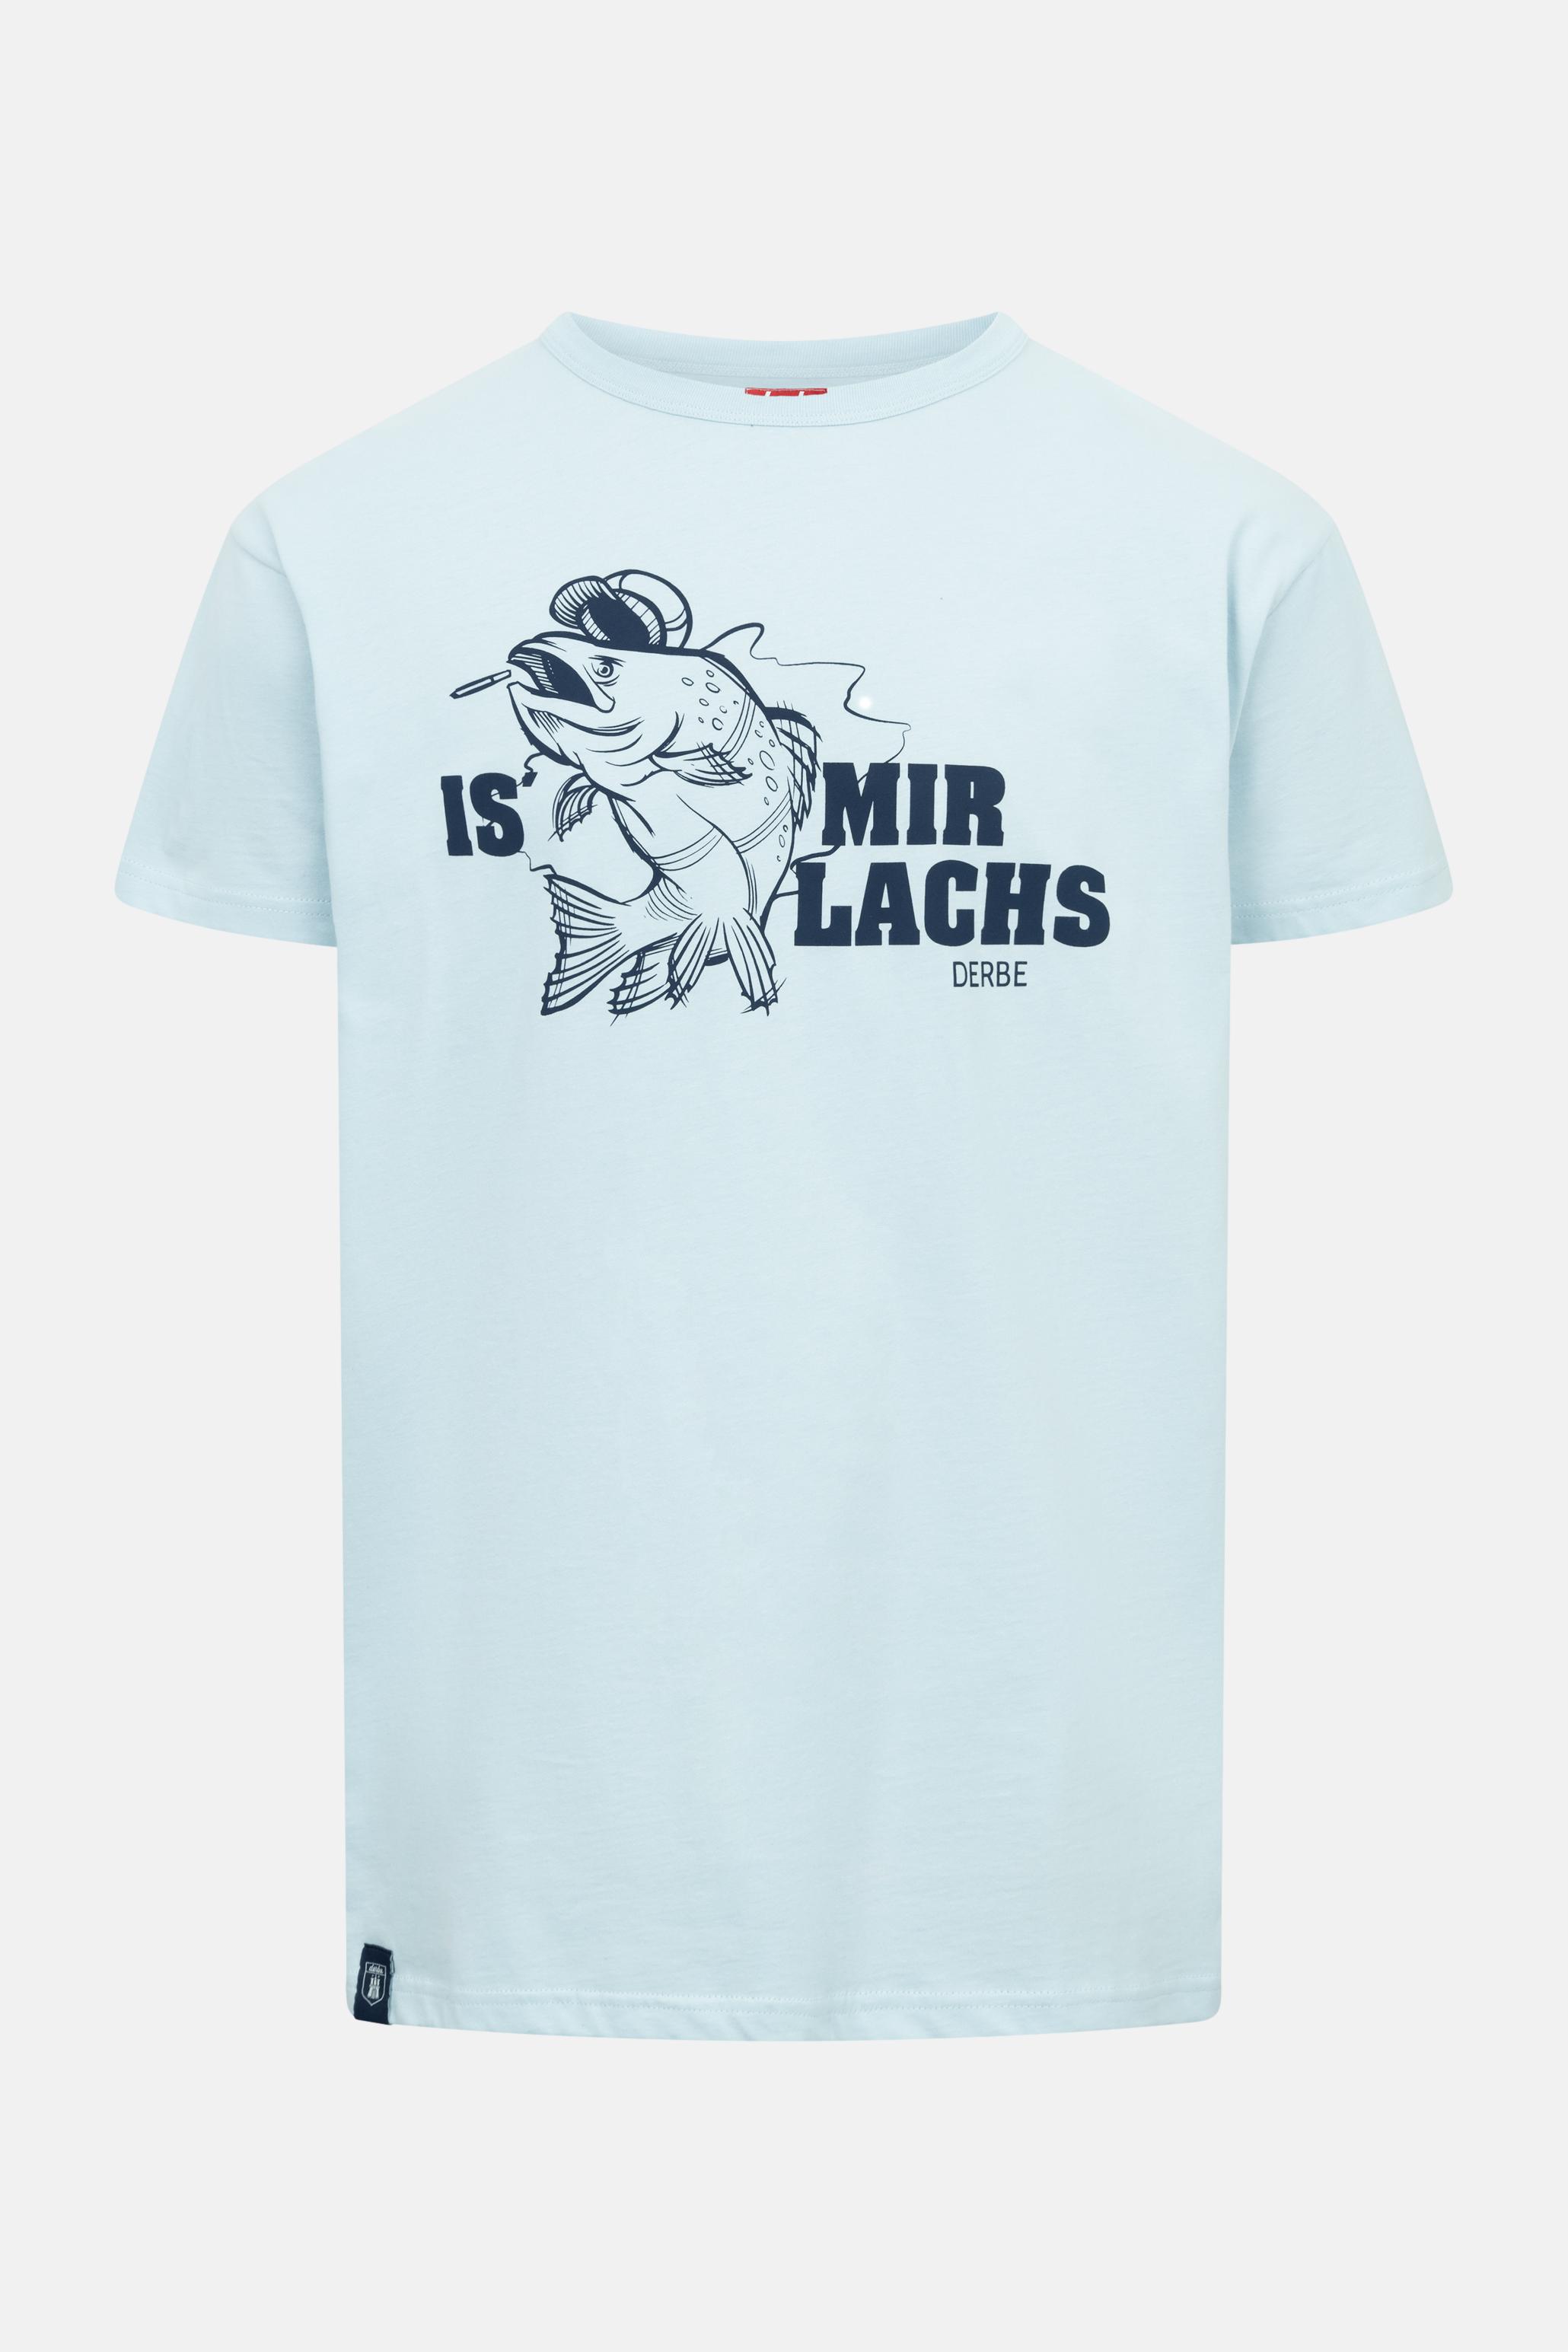 Derbe T-Shirt Herren Hellblau mir Is Lachs